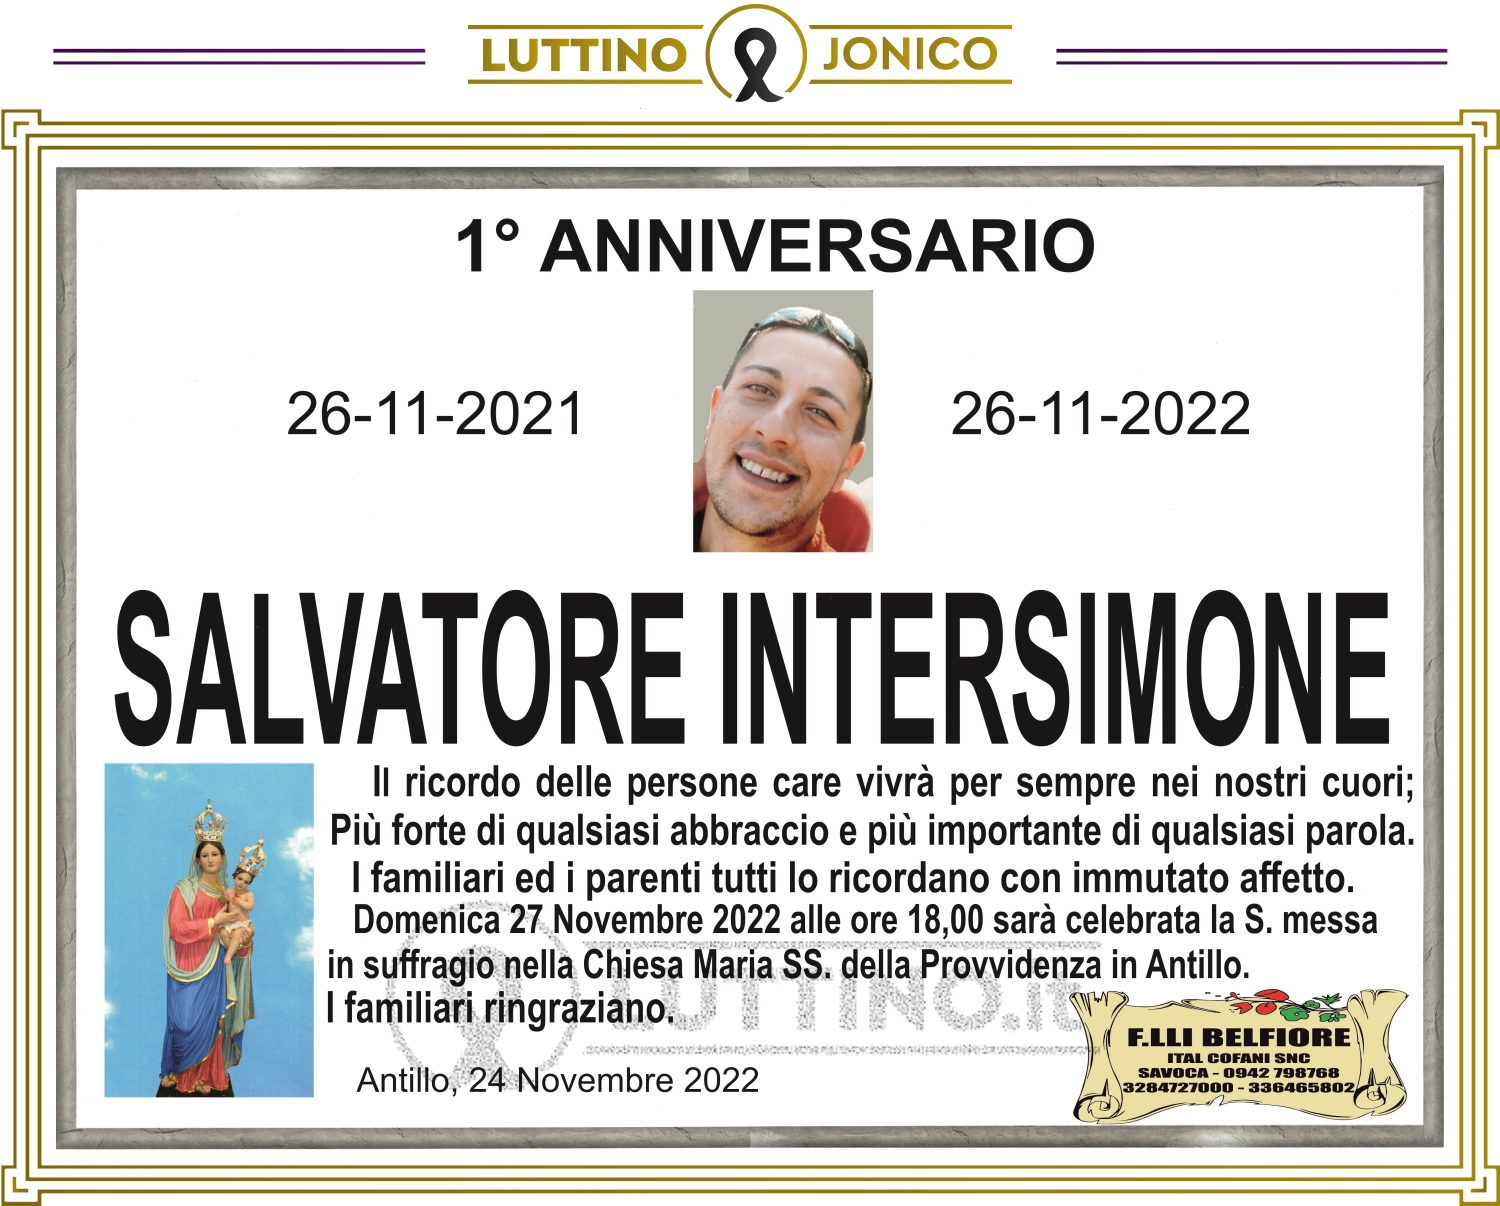 Salvatore Intersimone 